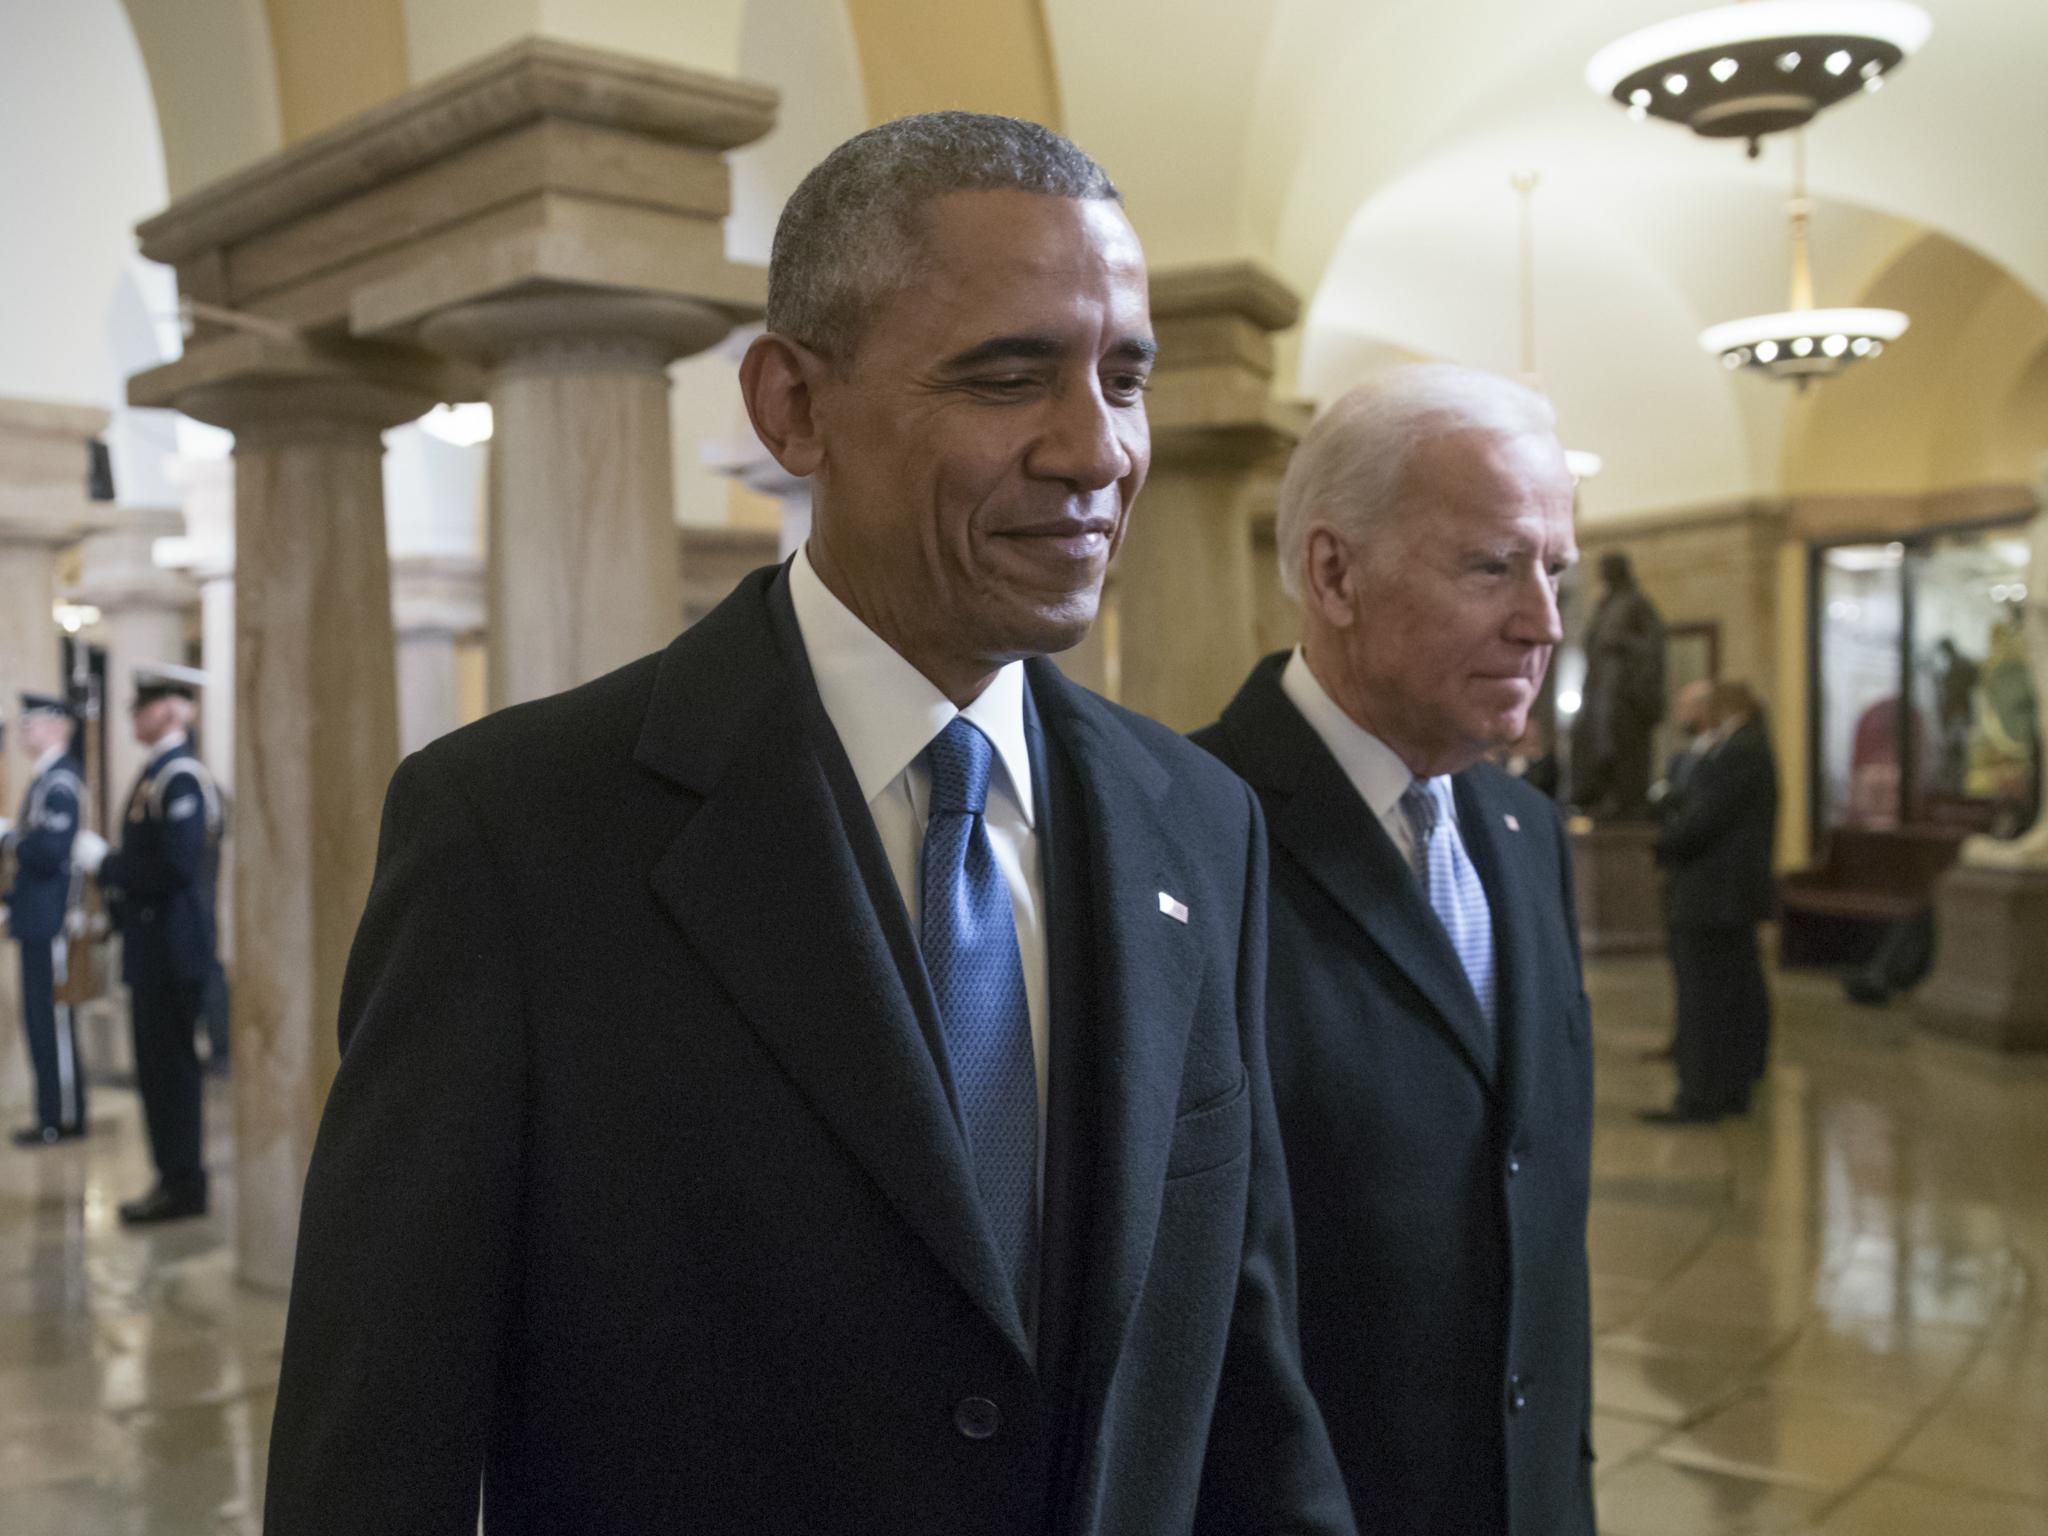 President Barack Obama and Vice President Joe Biden walk through the Crypt of the Capitol for Donald Trump's inauguration ceremony, in Washington 20 January 2017